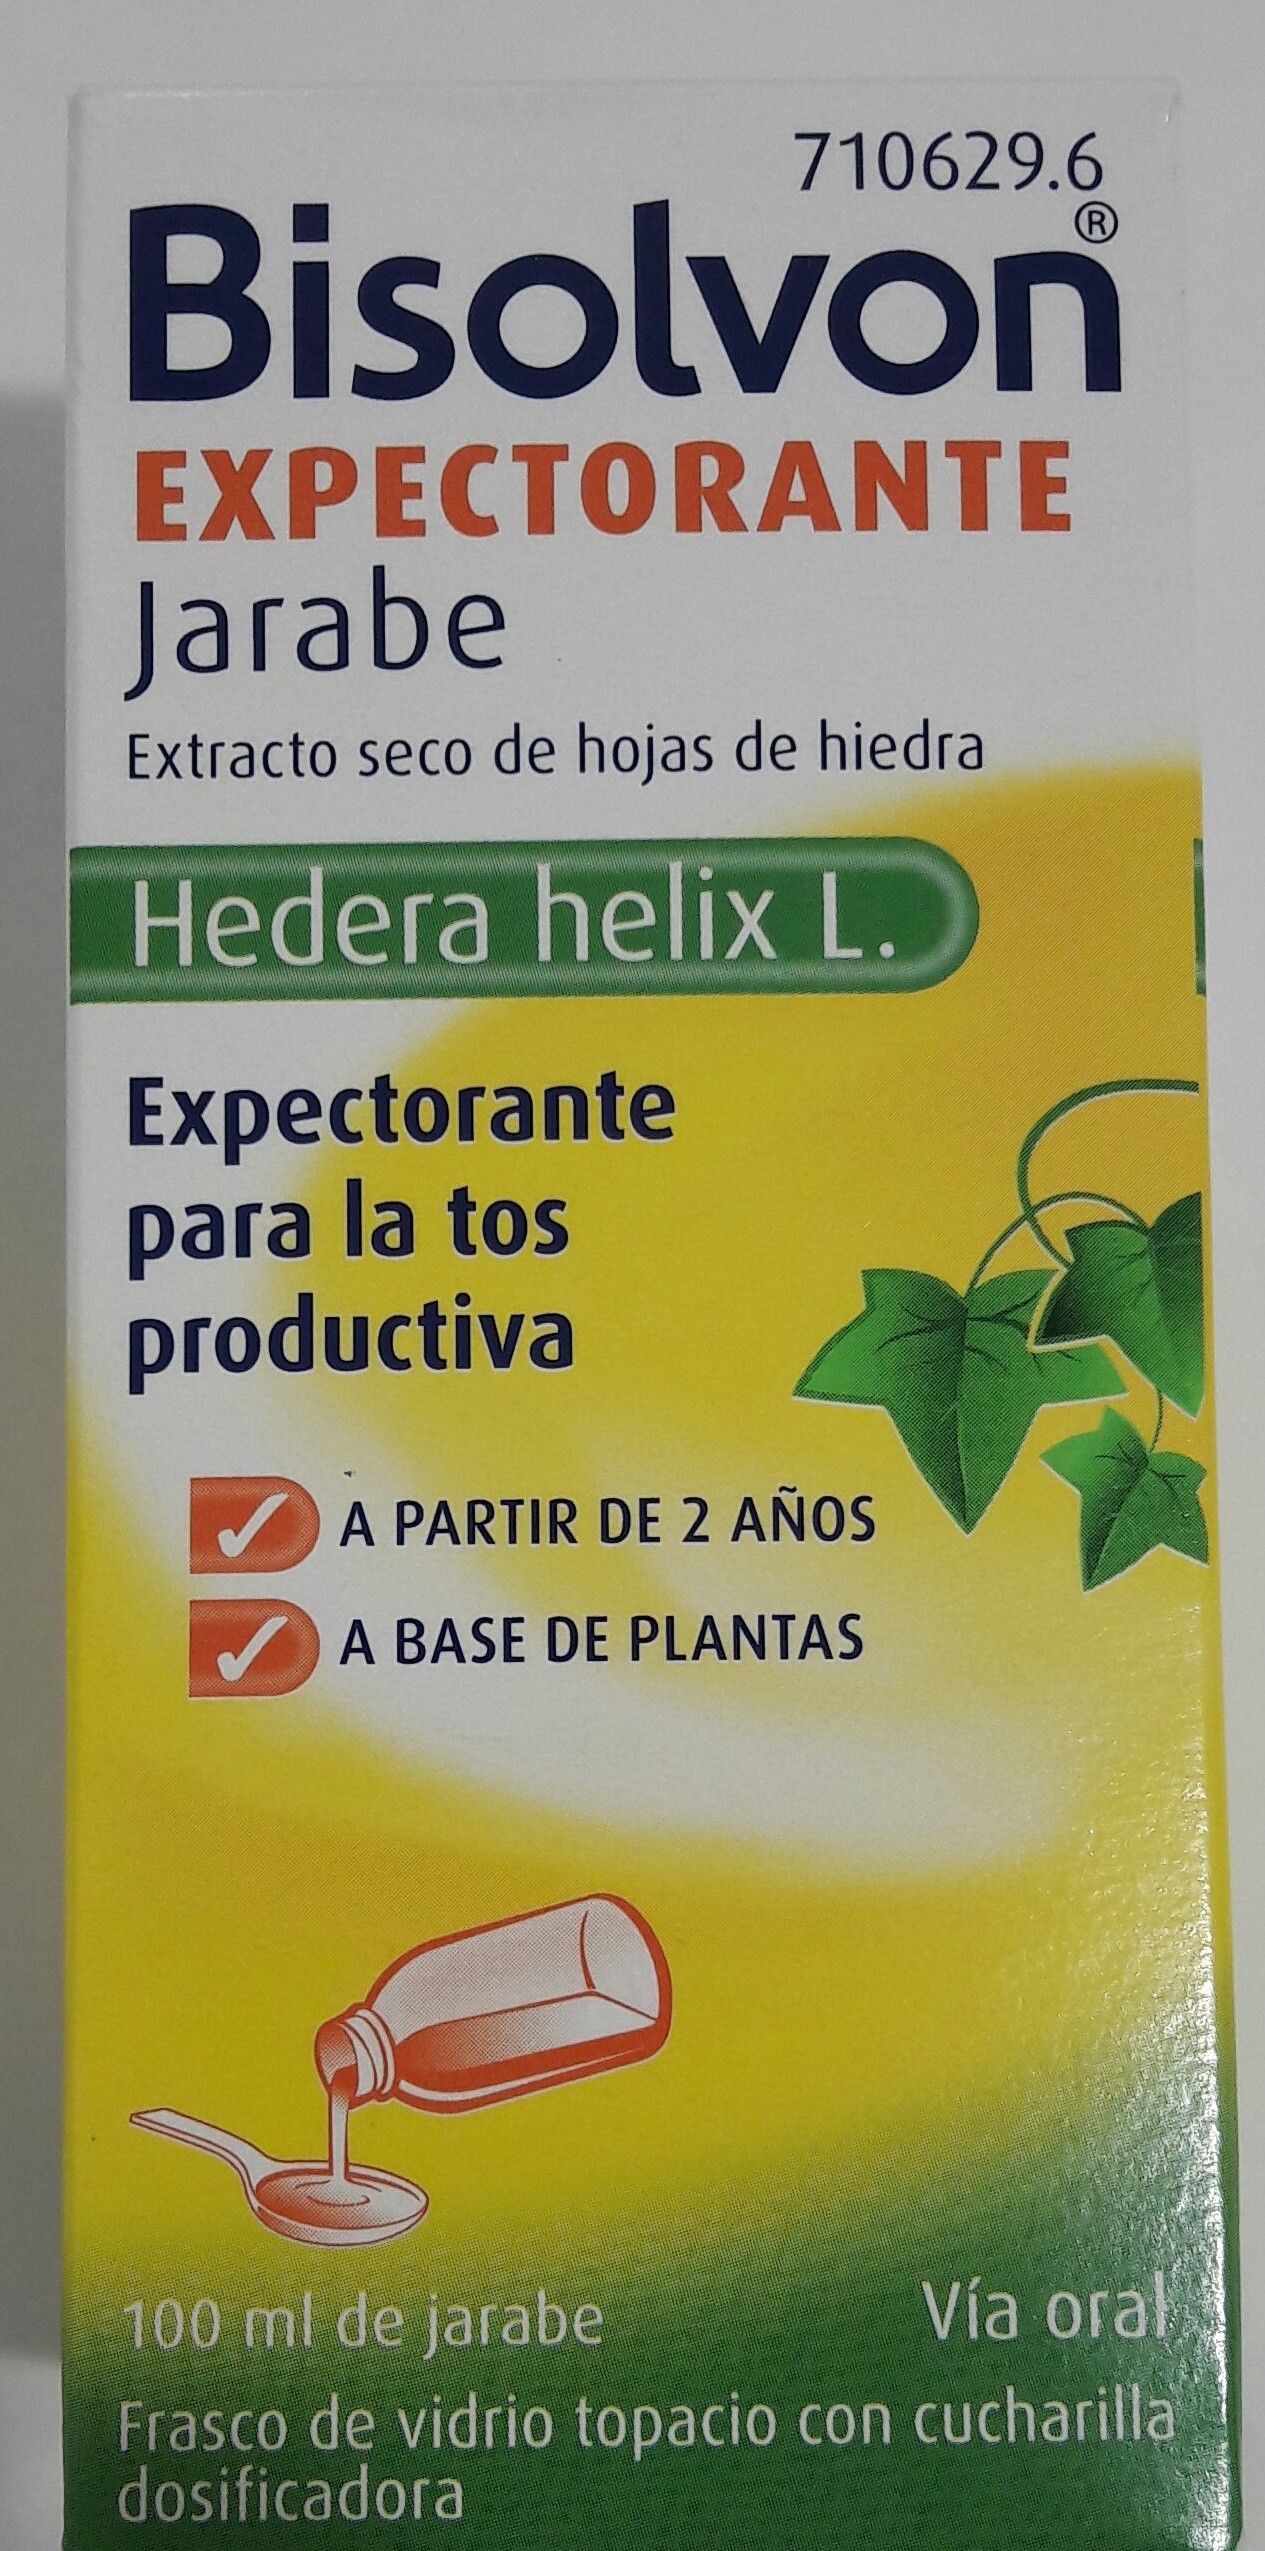 BISOLVON EXPECTORANTE JARABE 1 FRASCO 100 ml - Farmacia La Puebla 6